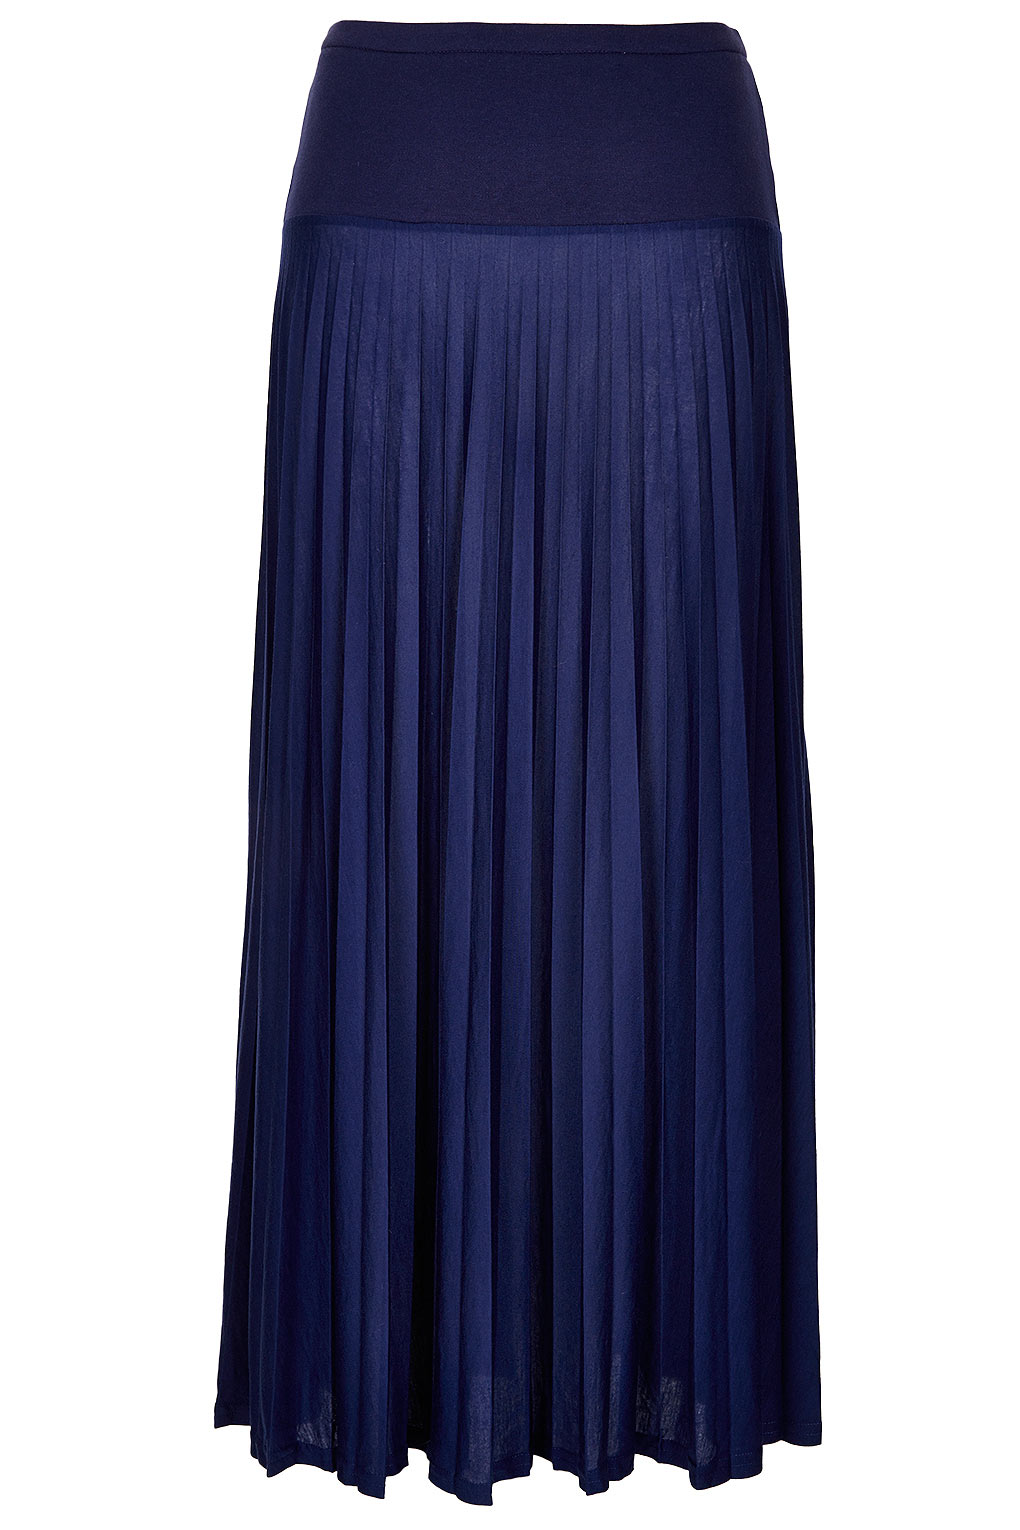 Lyst Topshop High Waist Pleated Maxi Skirt In Blue 